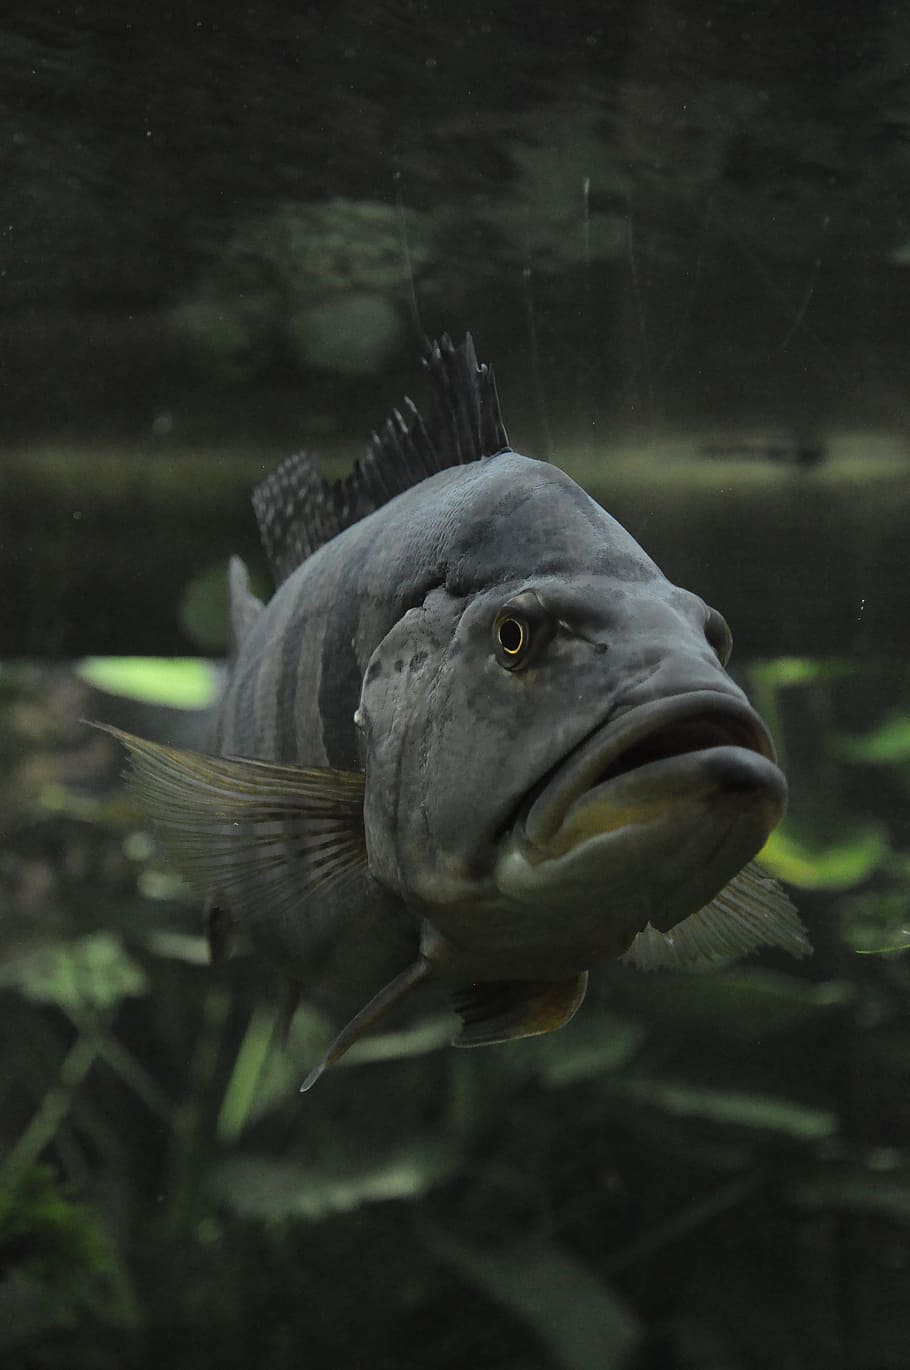 closeup photo of gray oscar fish, Water, Aquarium, Nature, one animal